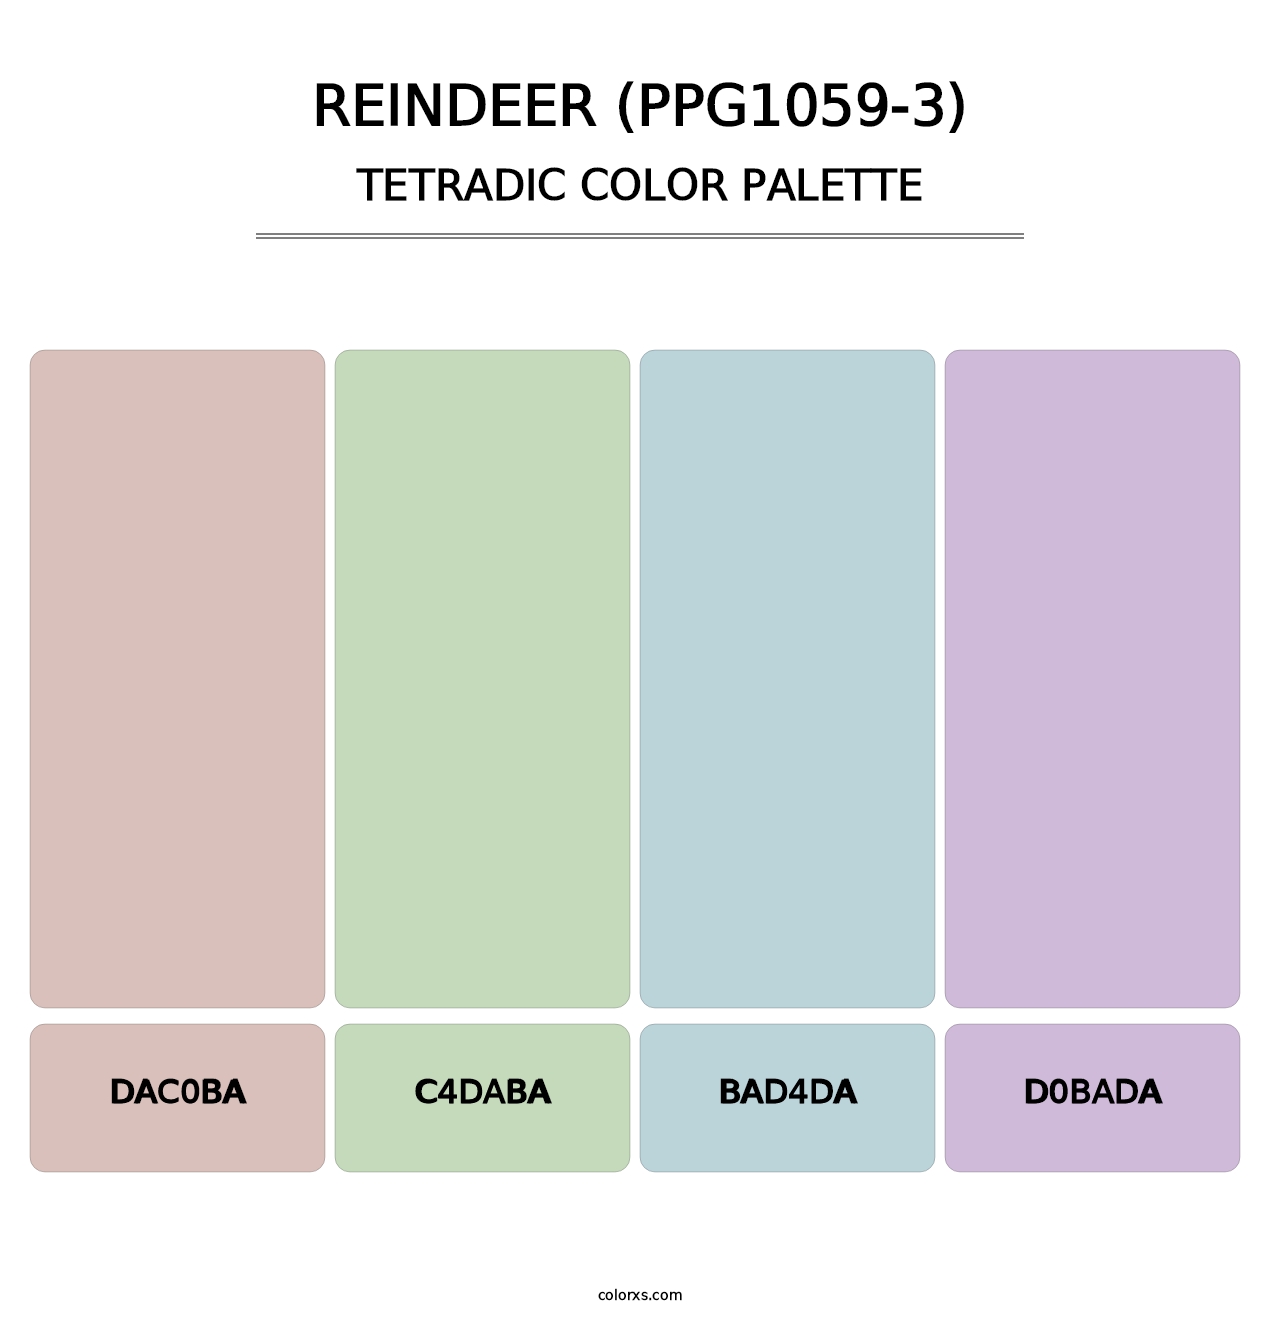 Reindeer (PPG1059-3) - Tetradic Color Palette